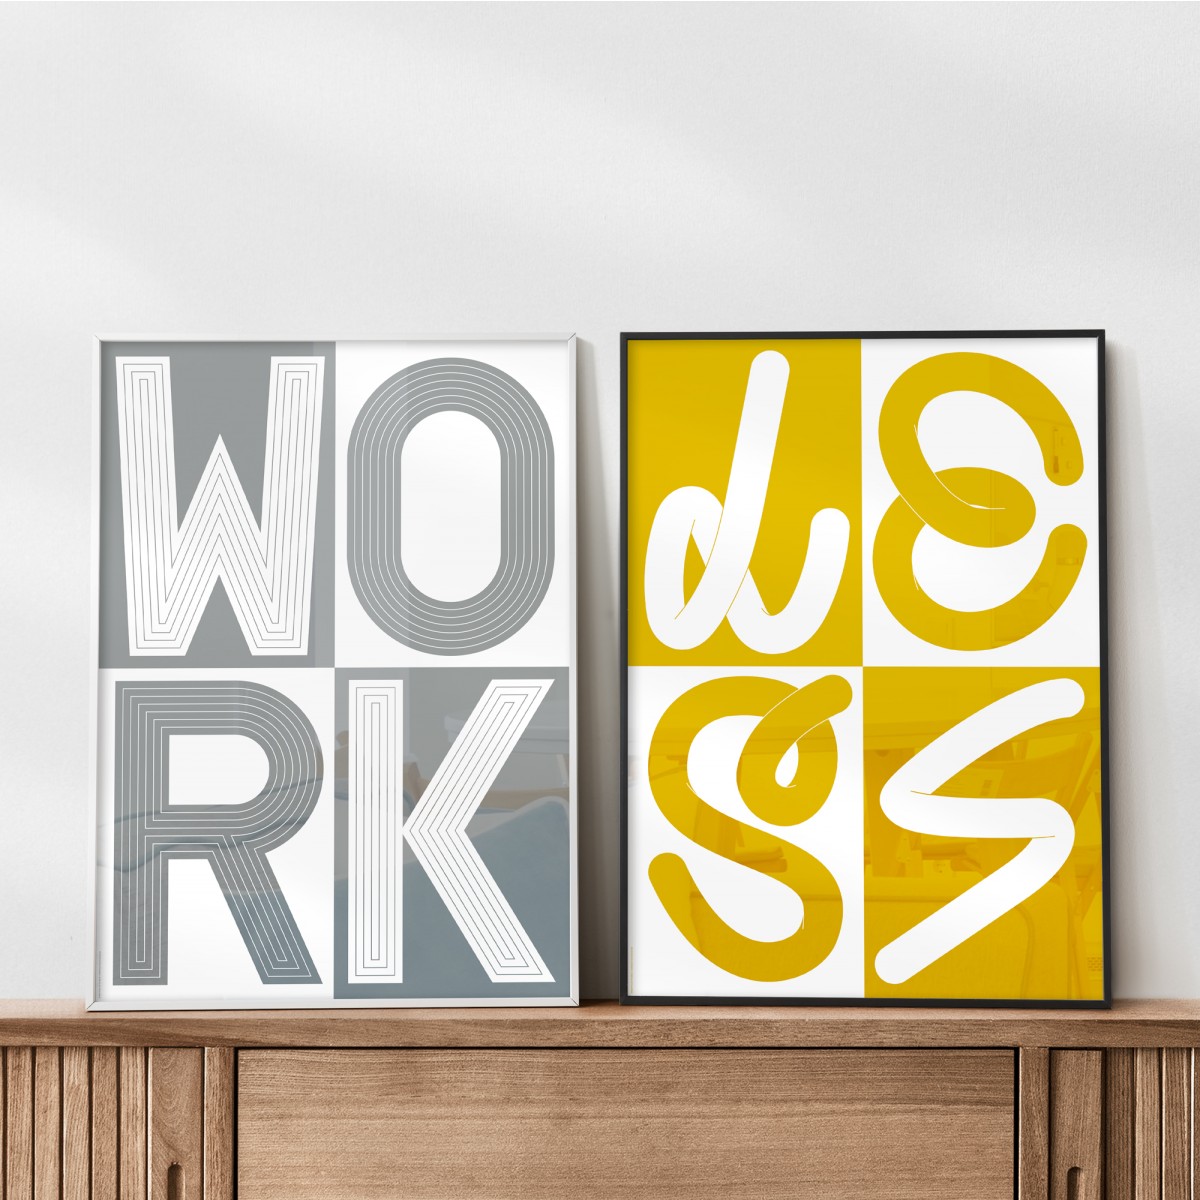 NEW PRINTS ON THE BLOCK / Plakat »Work«